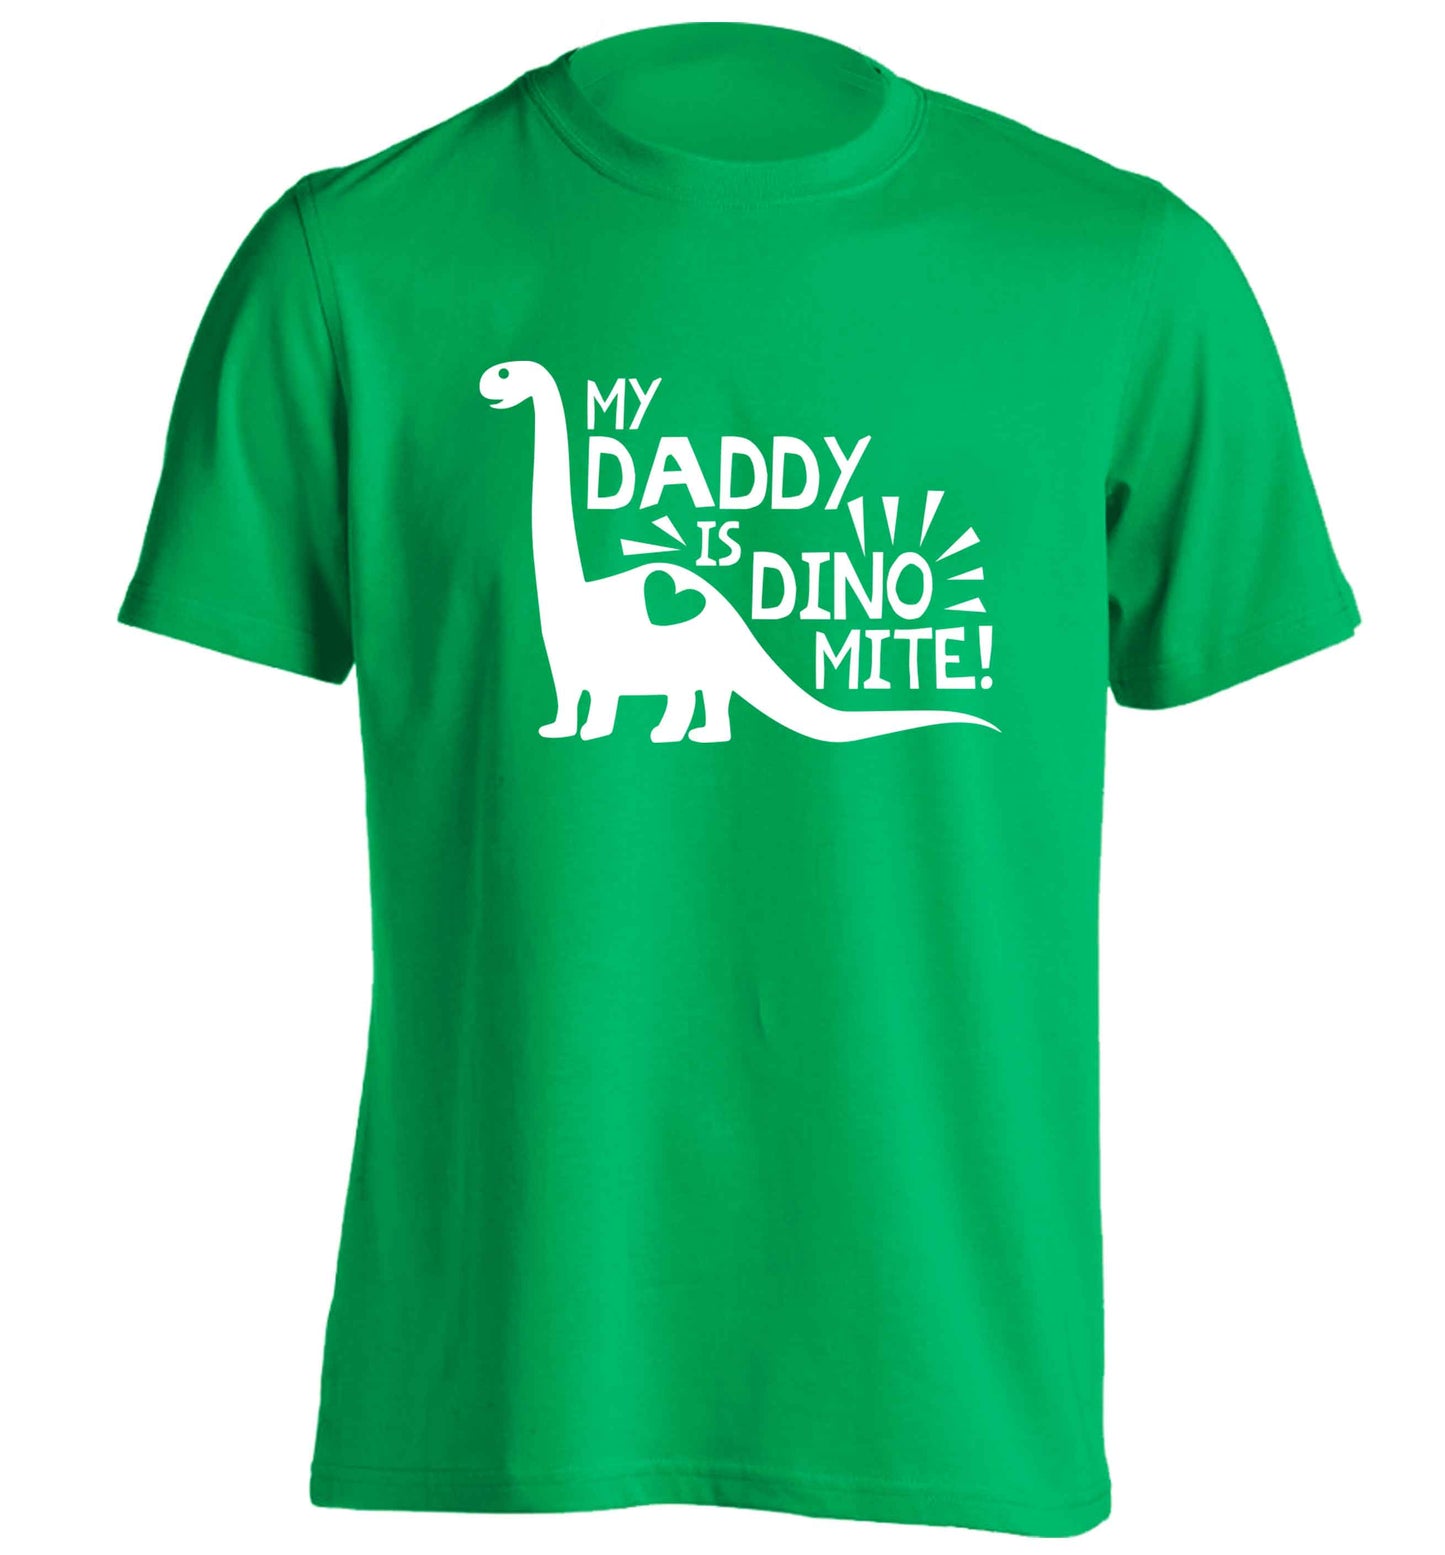 My daddy is dinomite! adults unisex green Tshirt 2XL